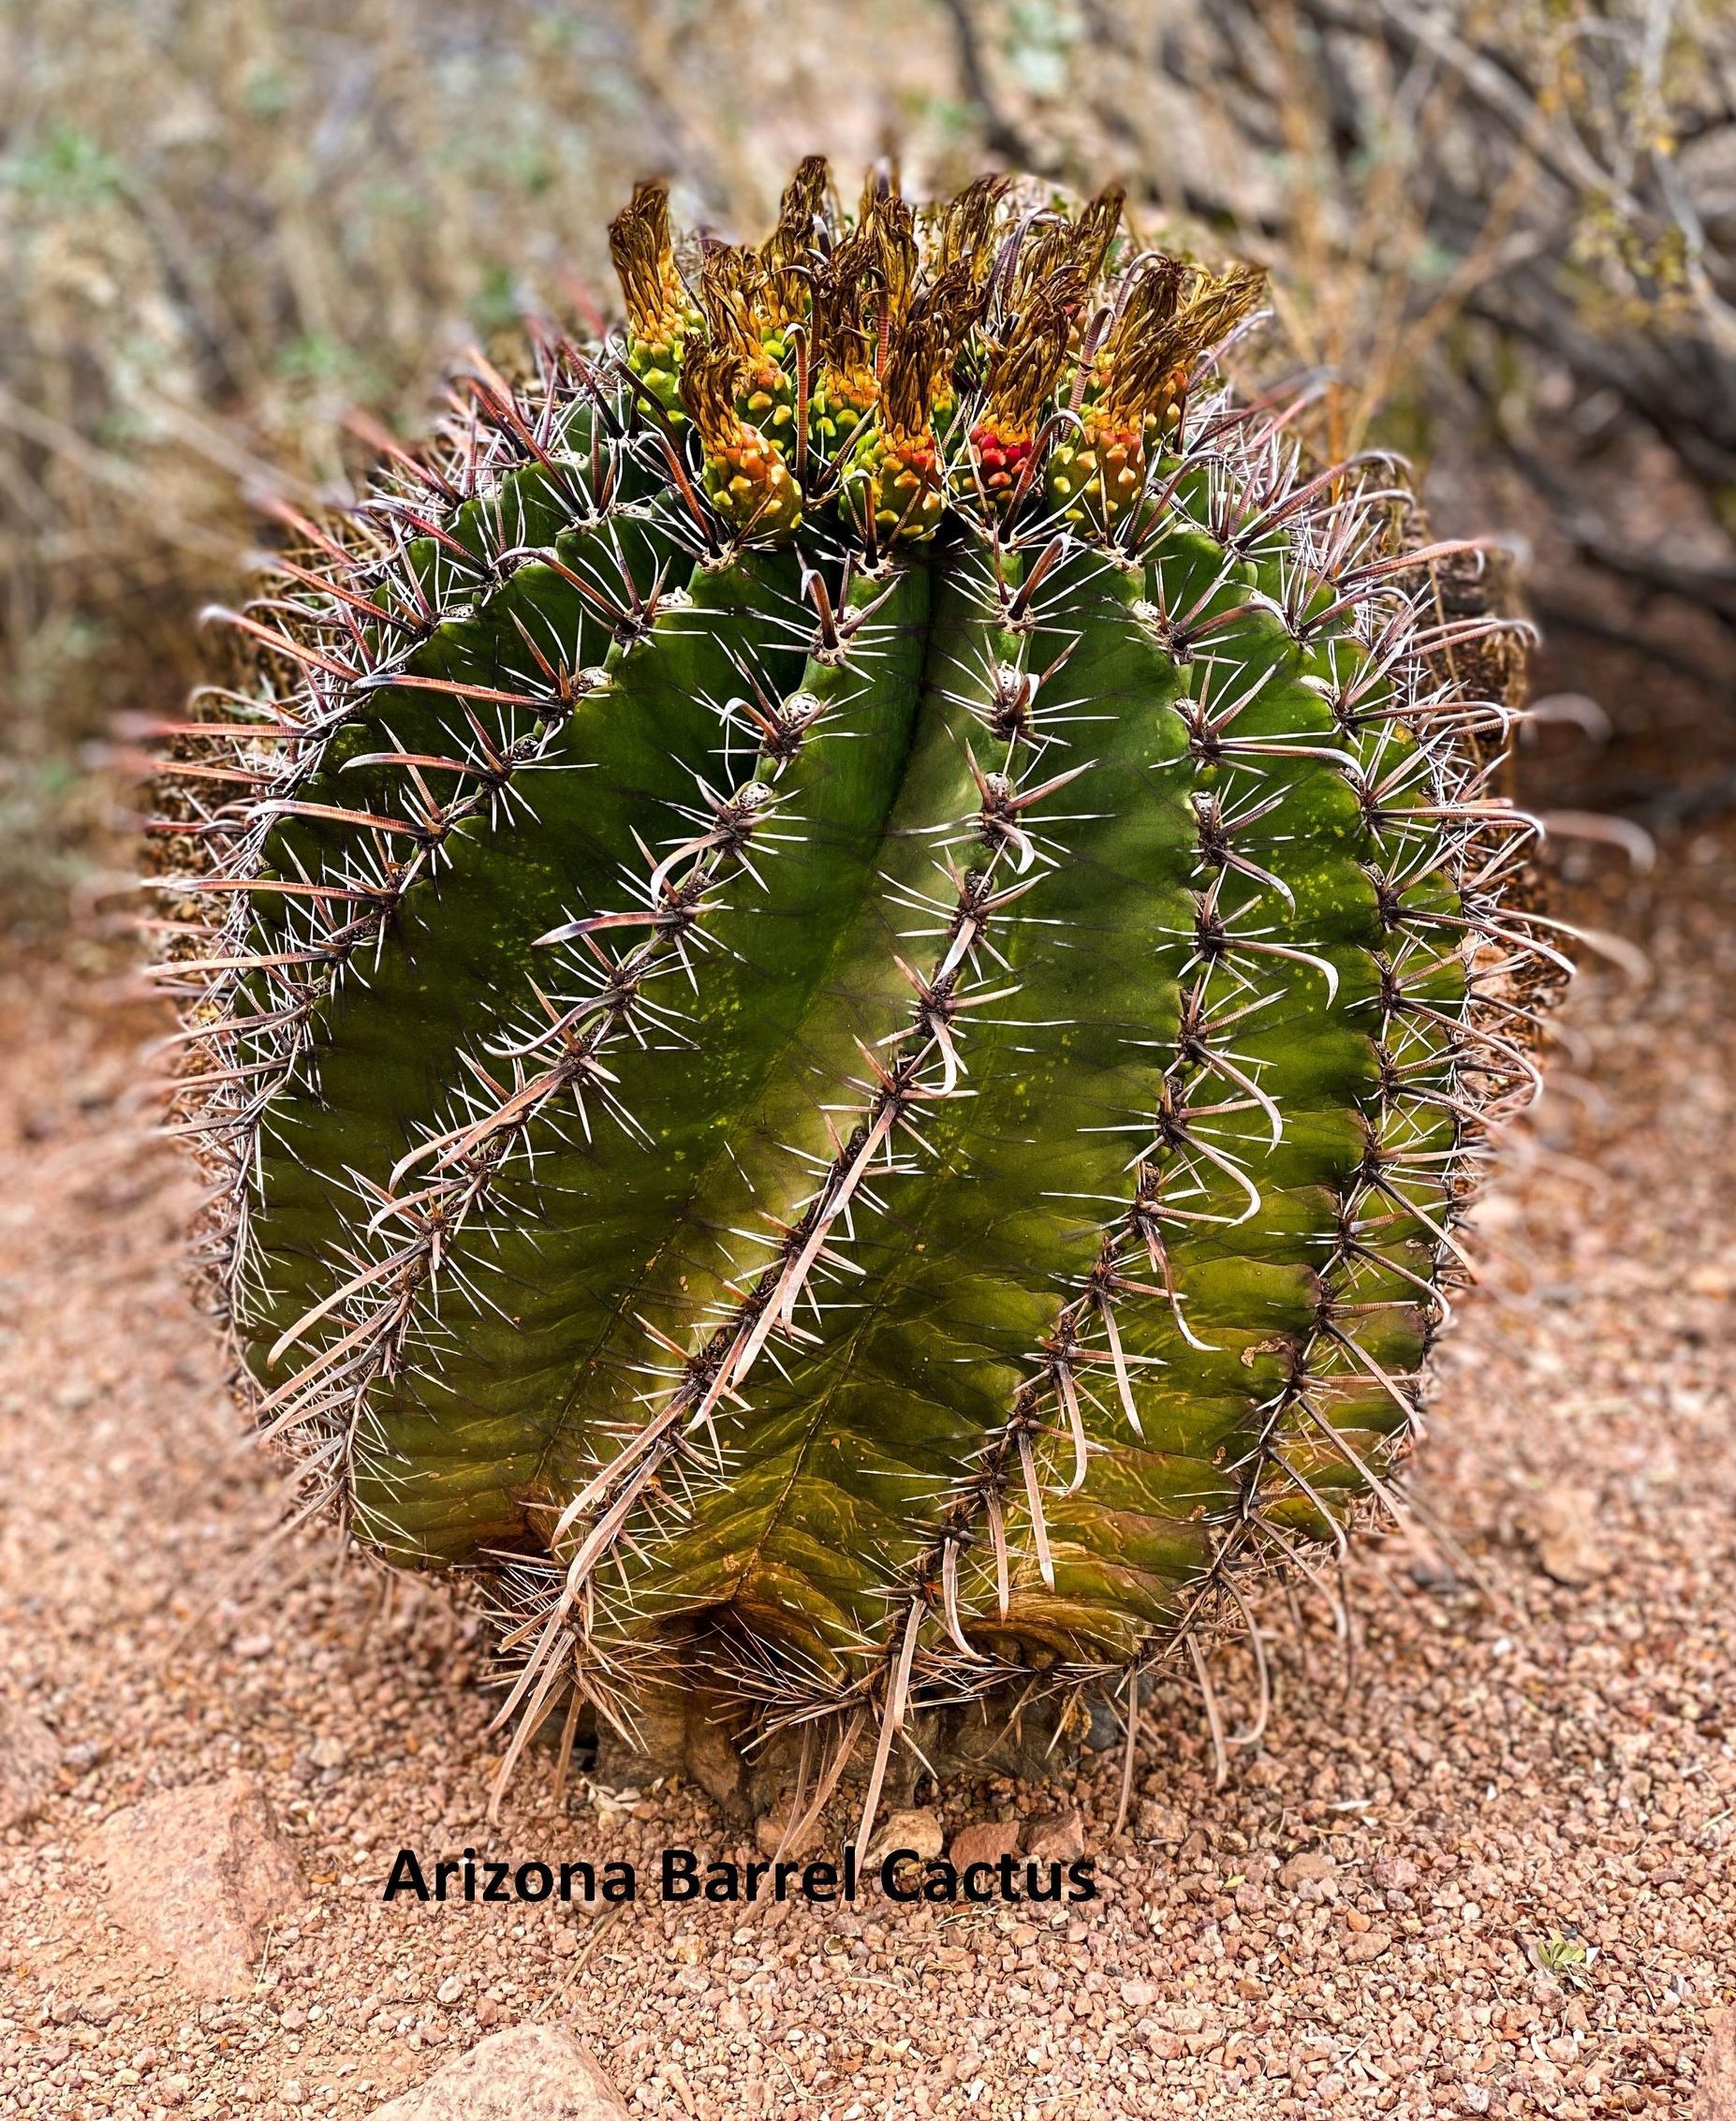 An Arizona barrel cactus with yellow flowers on top